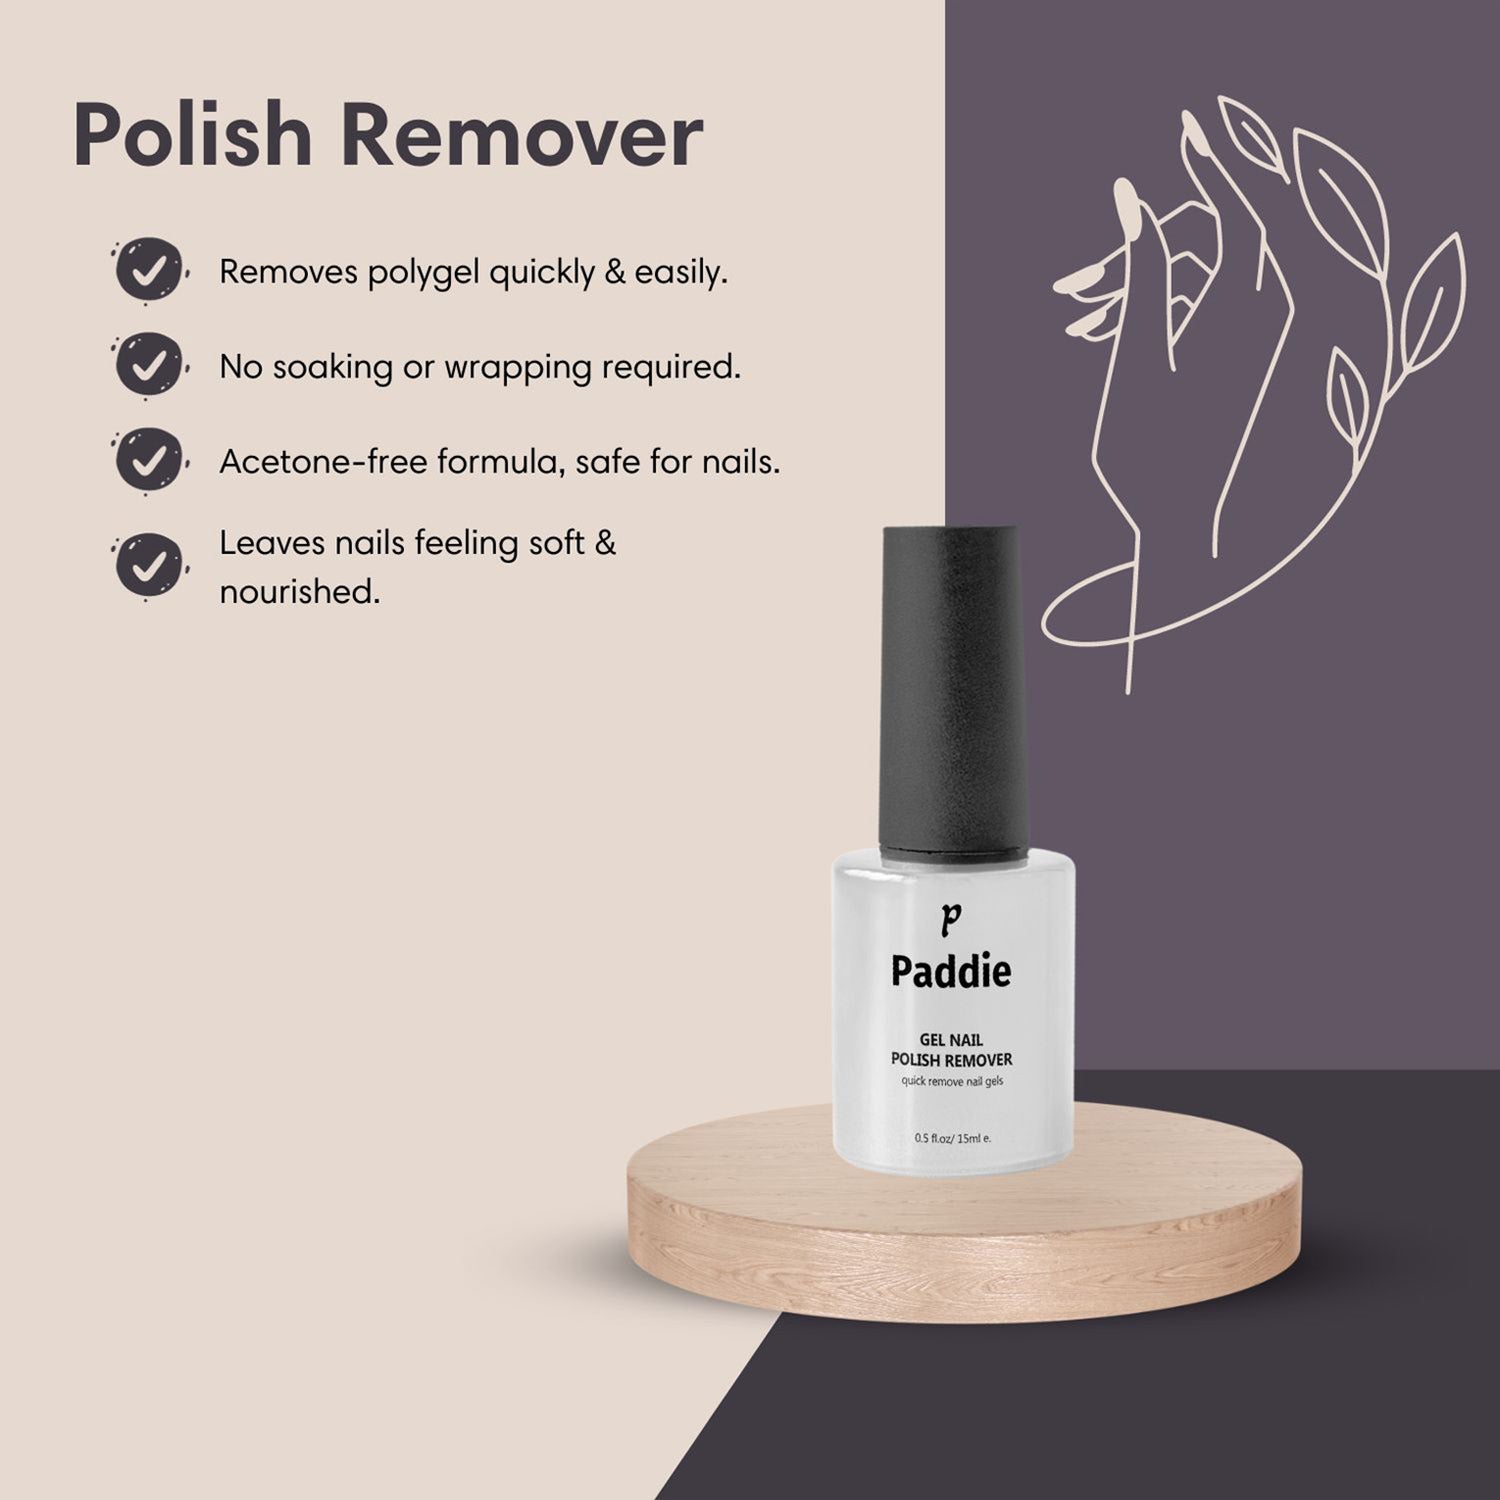 Aliver Gel Nail Polish Remover Professional gel polish remover, 0.5 oz -  Walmart.com